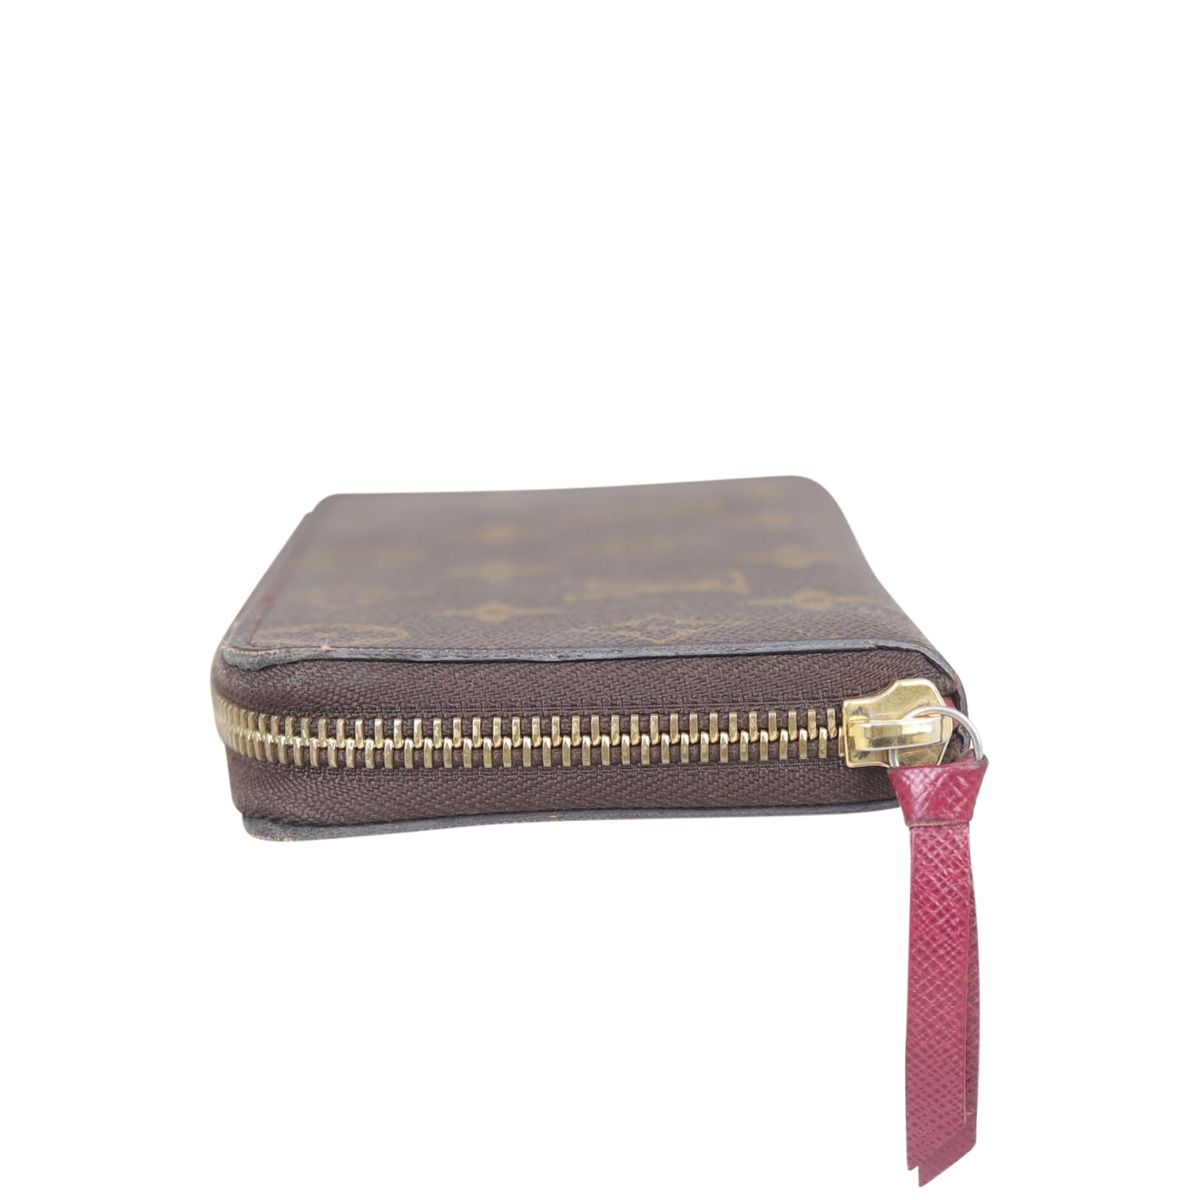 Louis Vuitton Clemence Wallet in Monogram – The Bag Broker